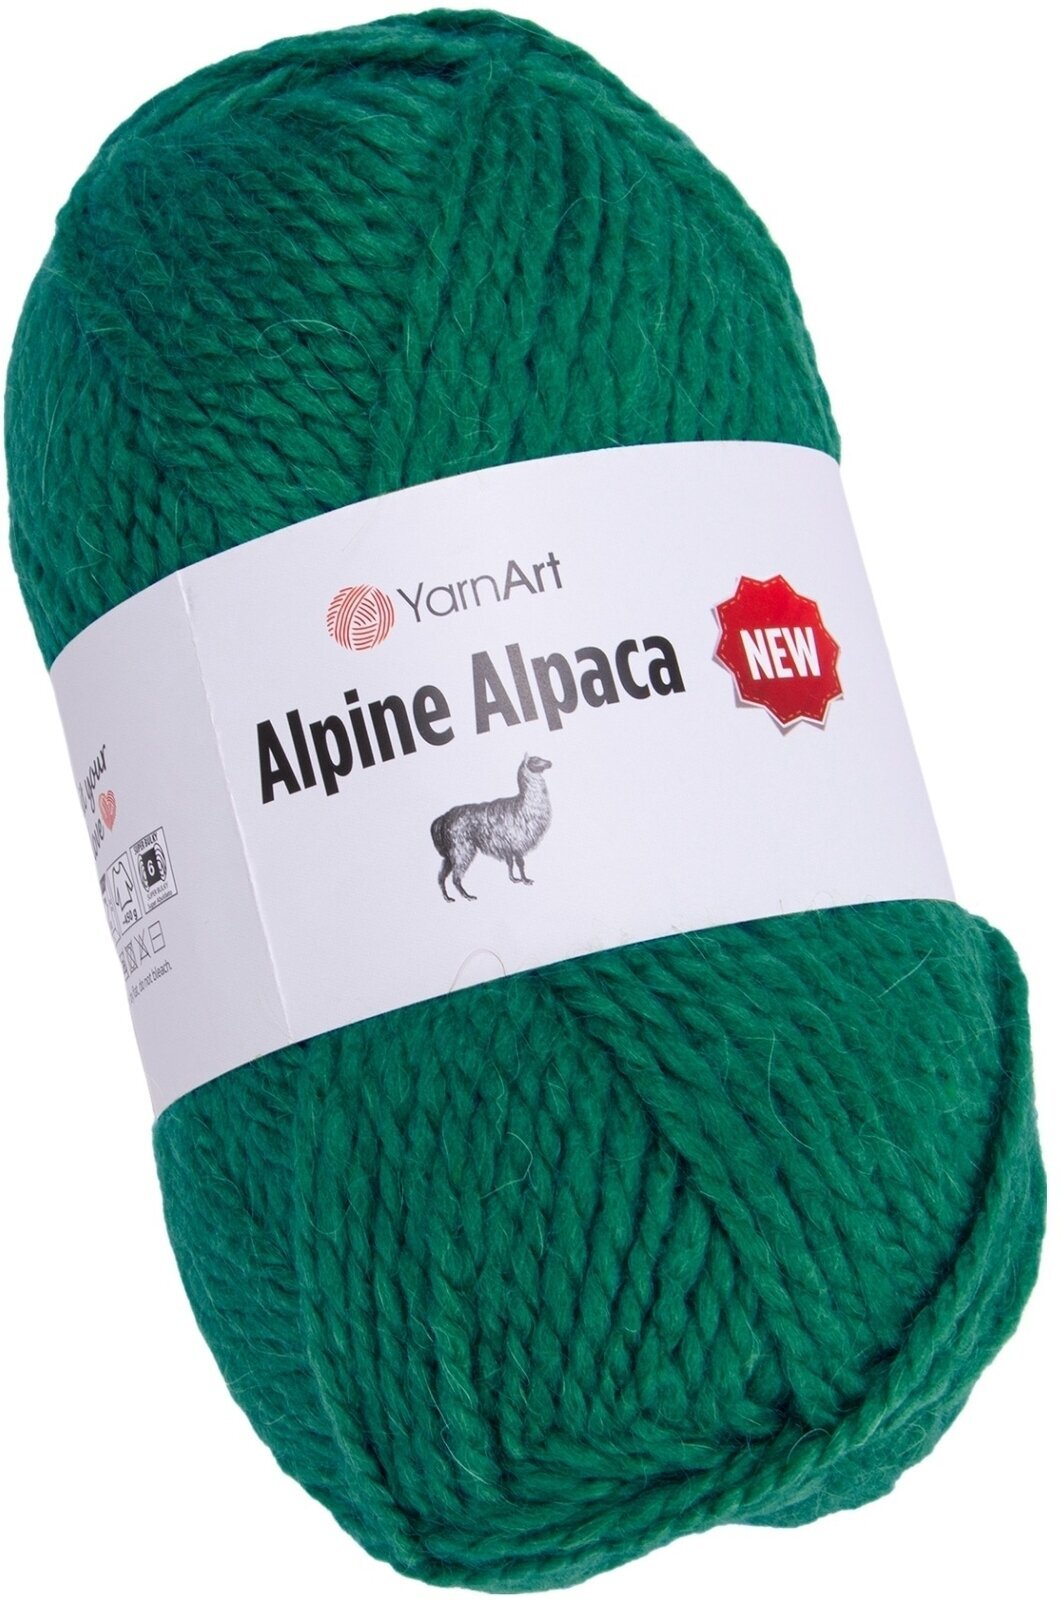 Neulelanka Yarn Art Alpine Alpaca 1449